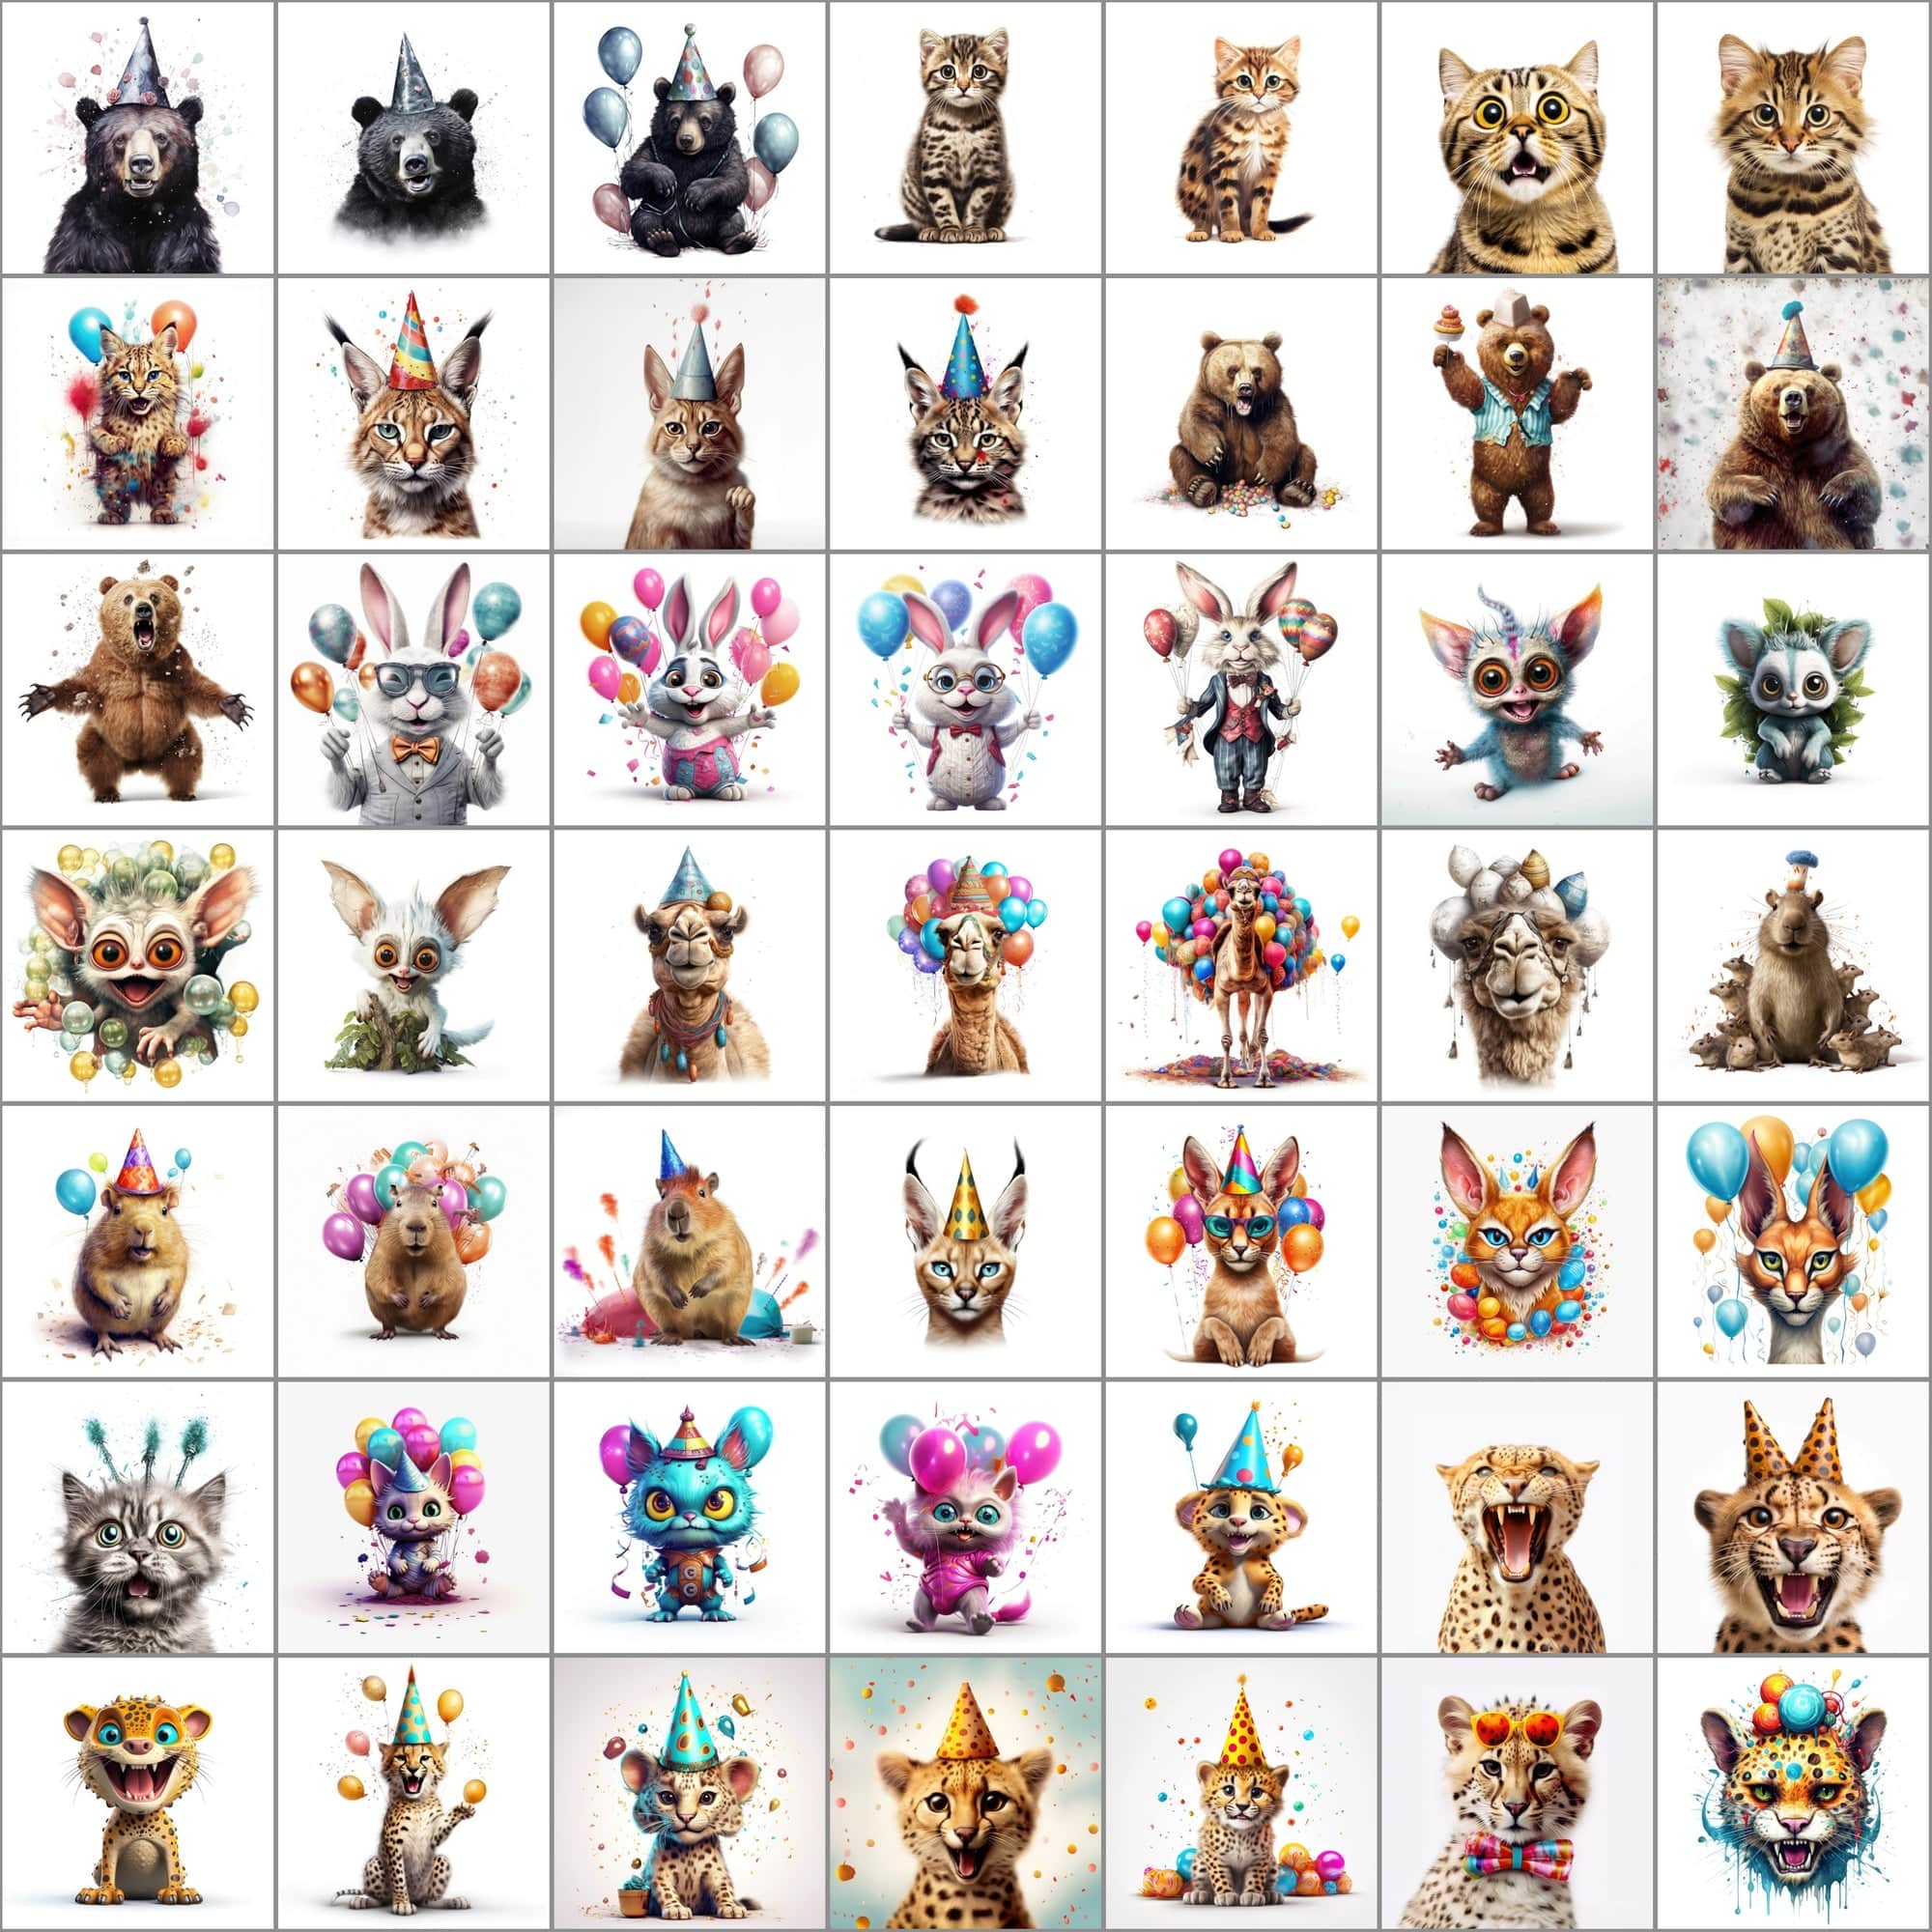 780+ Funny Animal PNG Images - Hyperrealistic & Colorful, Commercial License Digital Download Sumobundle